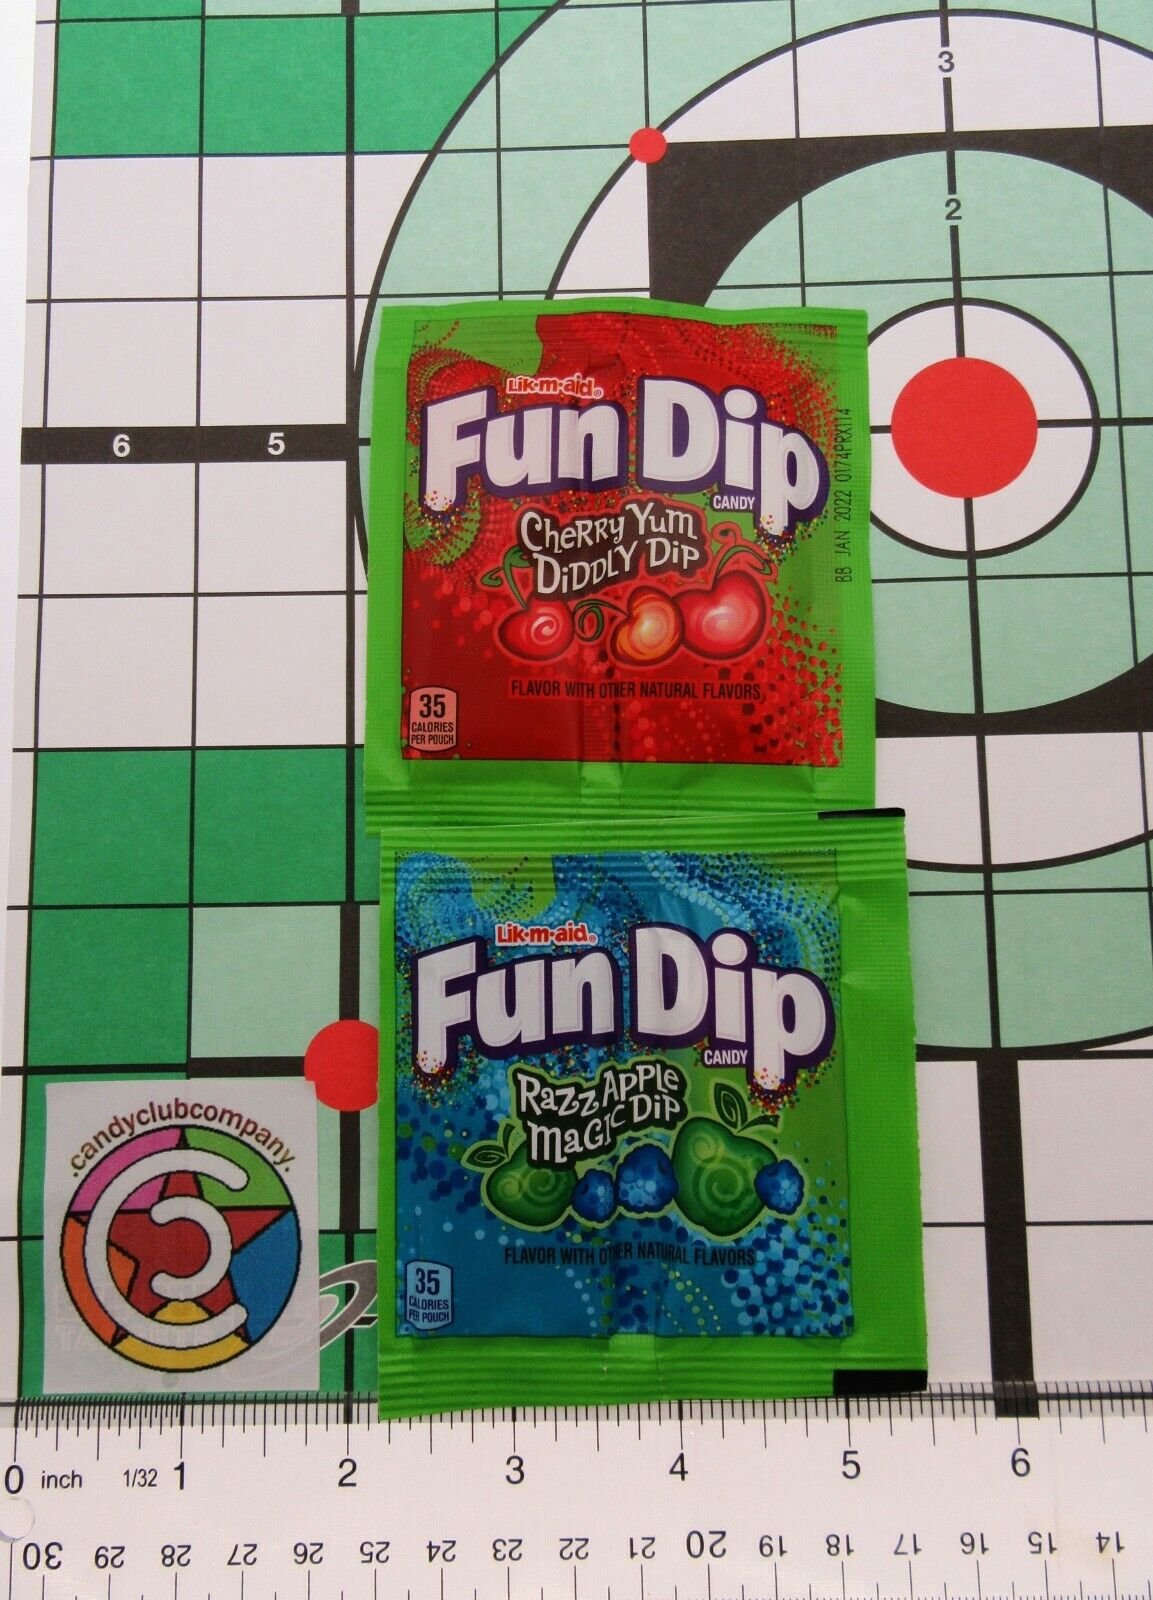 Fun Dip ~ Razz Apple Magic Dip and Cherry Yum Diddly Dip ~ Candy